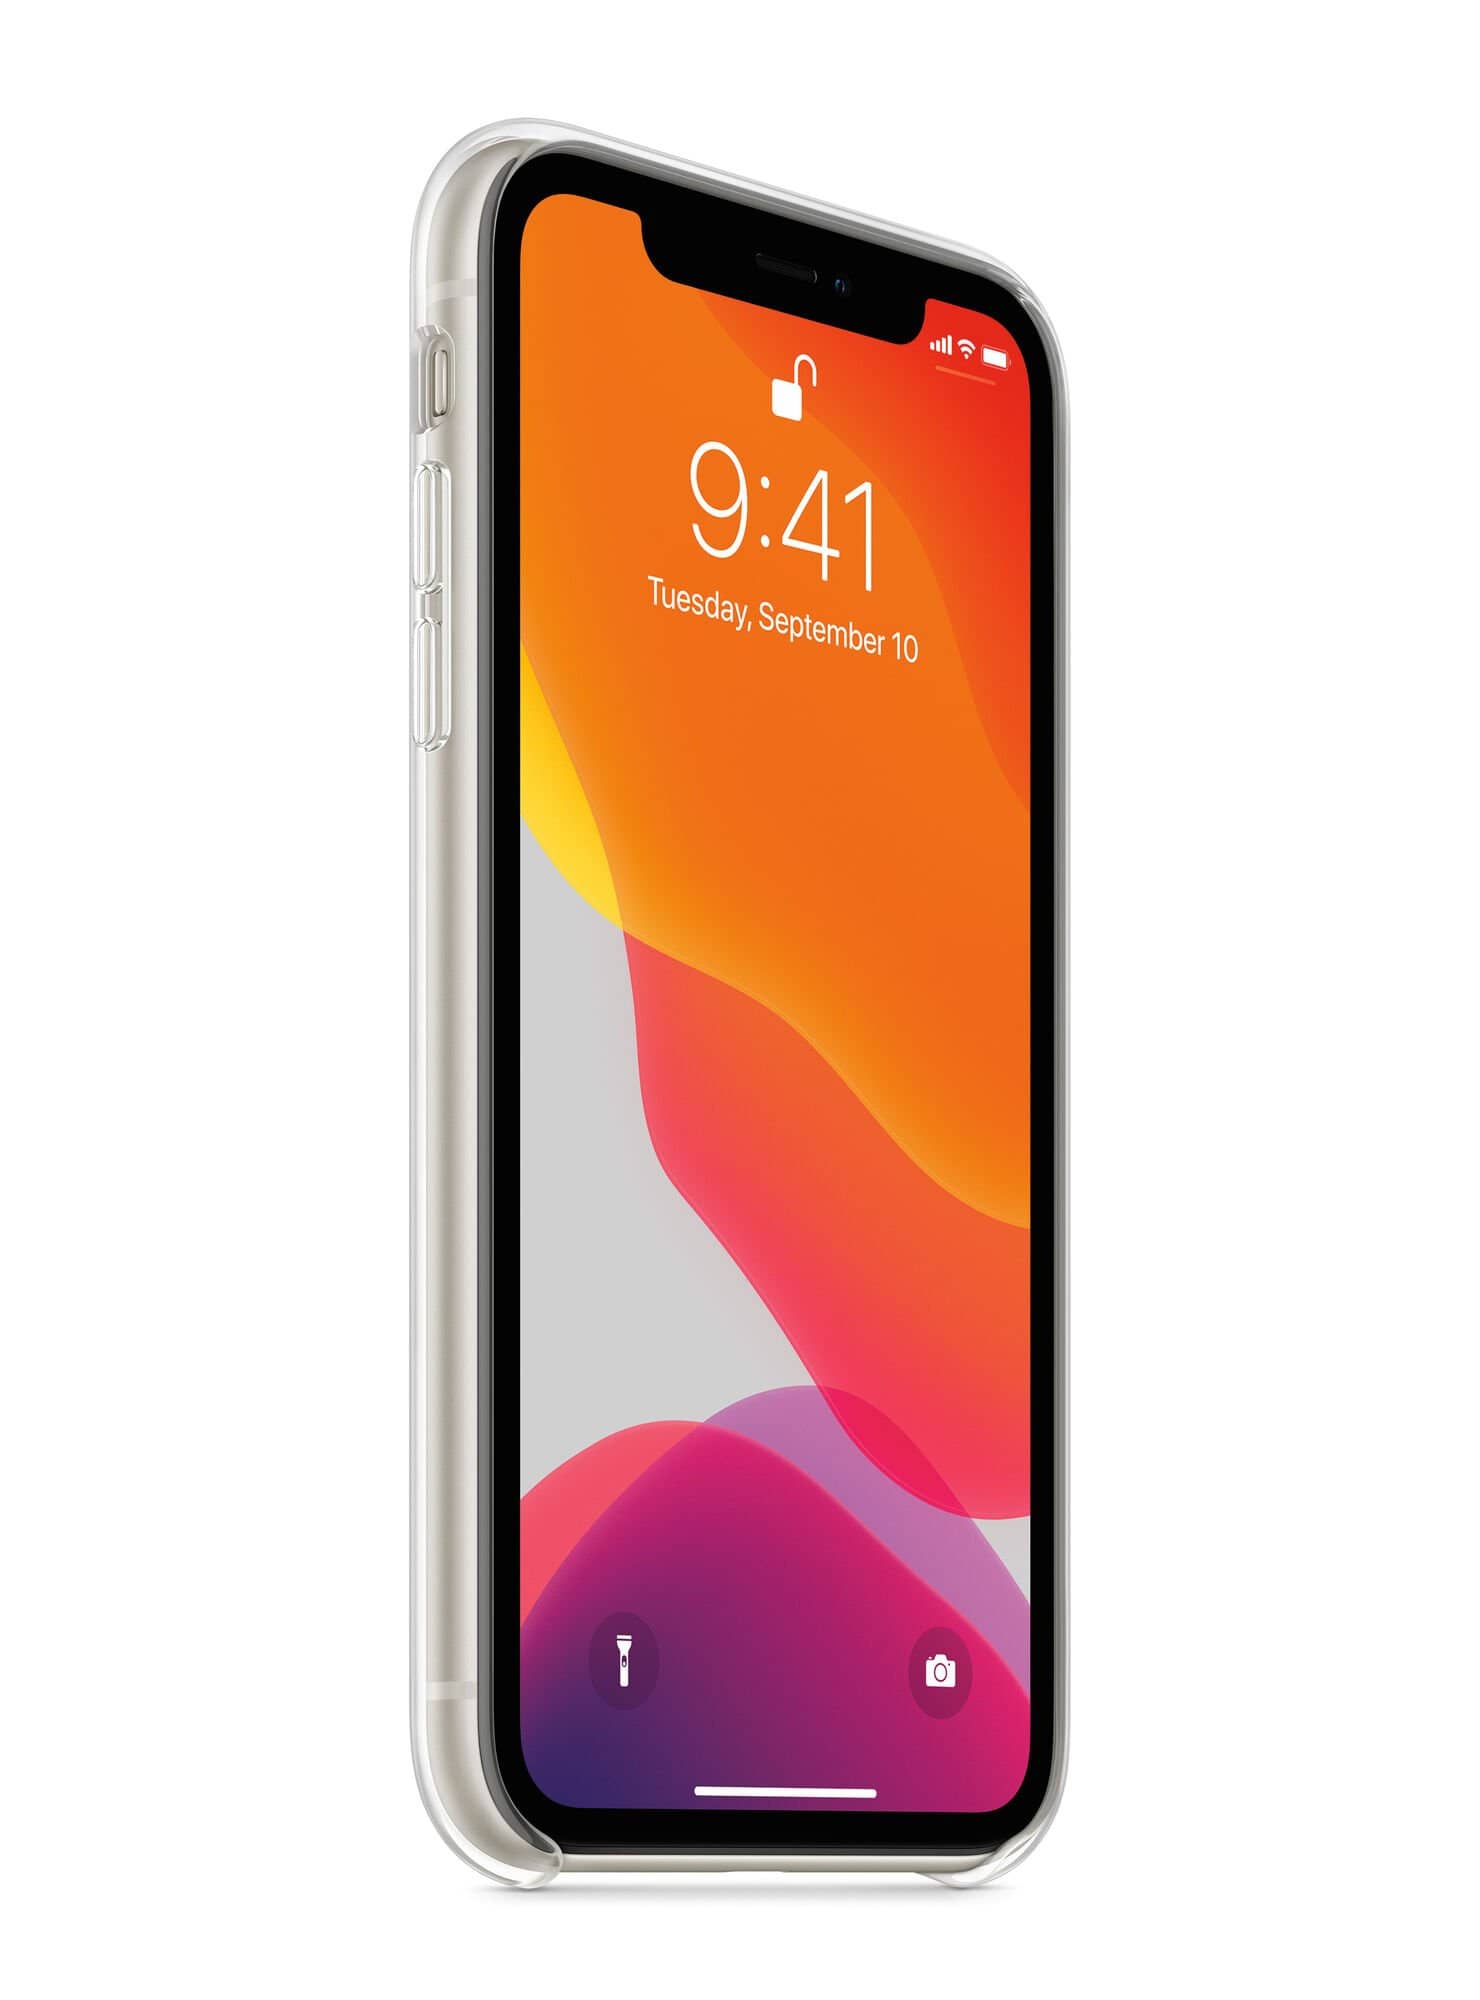 Carcasa color transparente iPhone 11 Pro